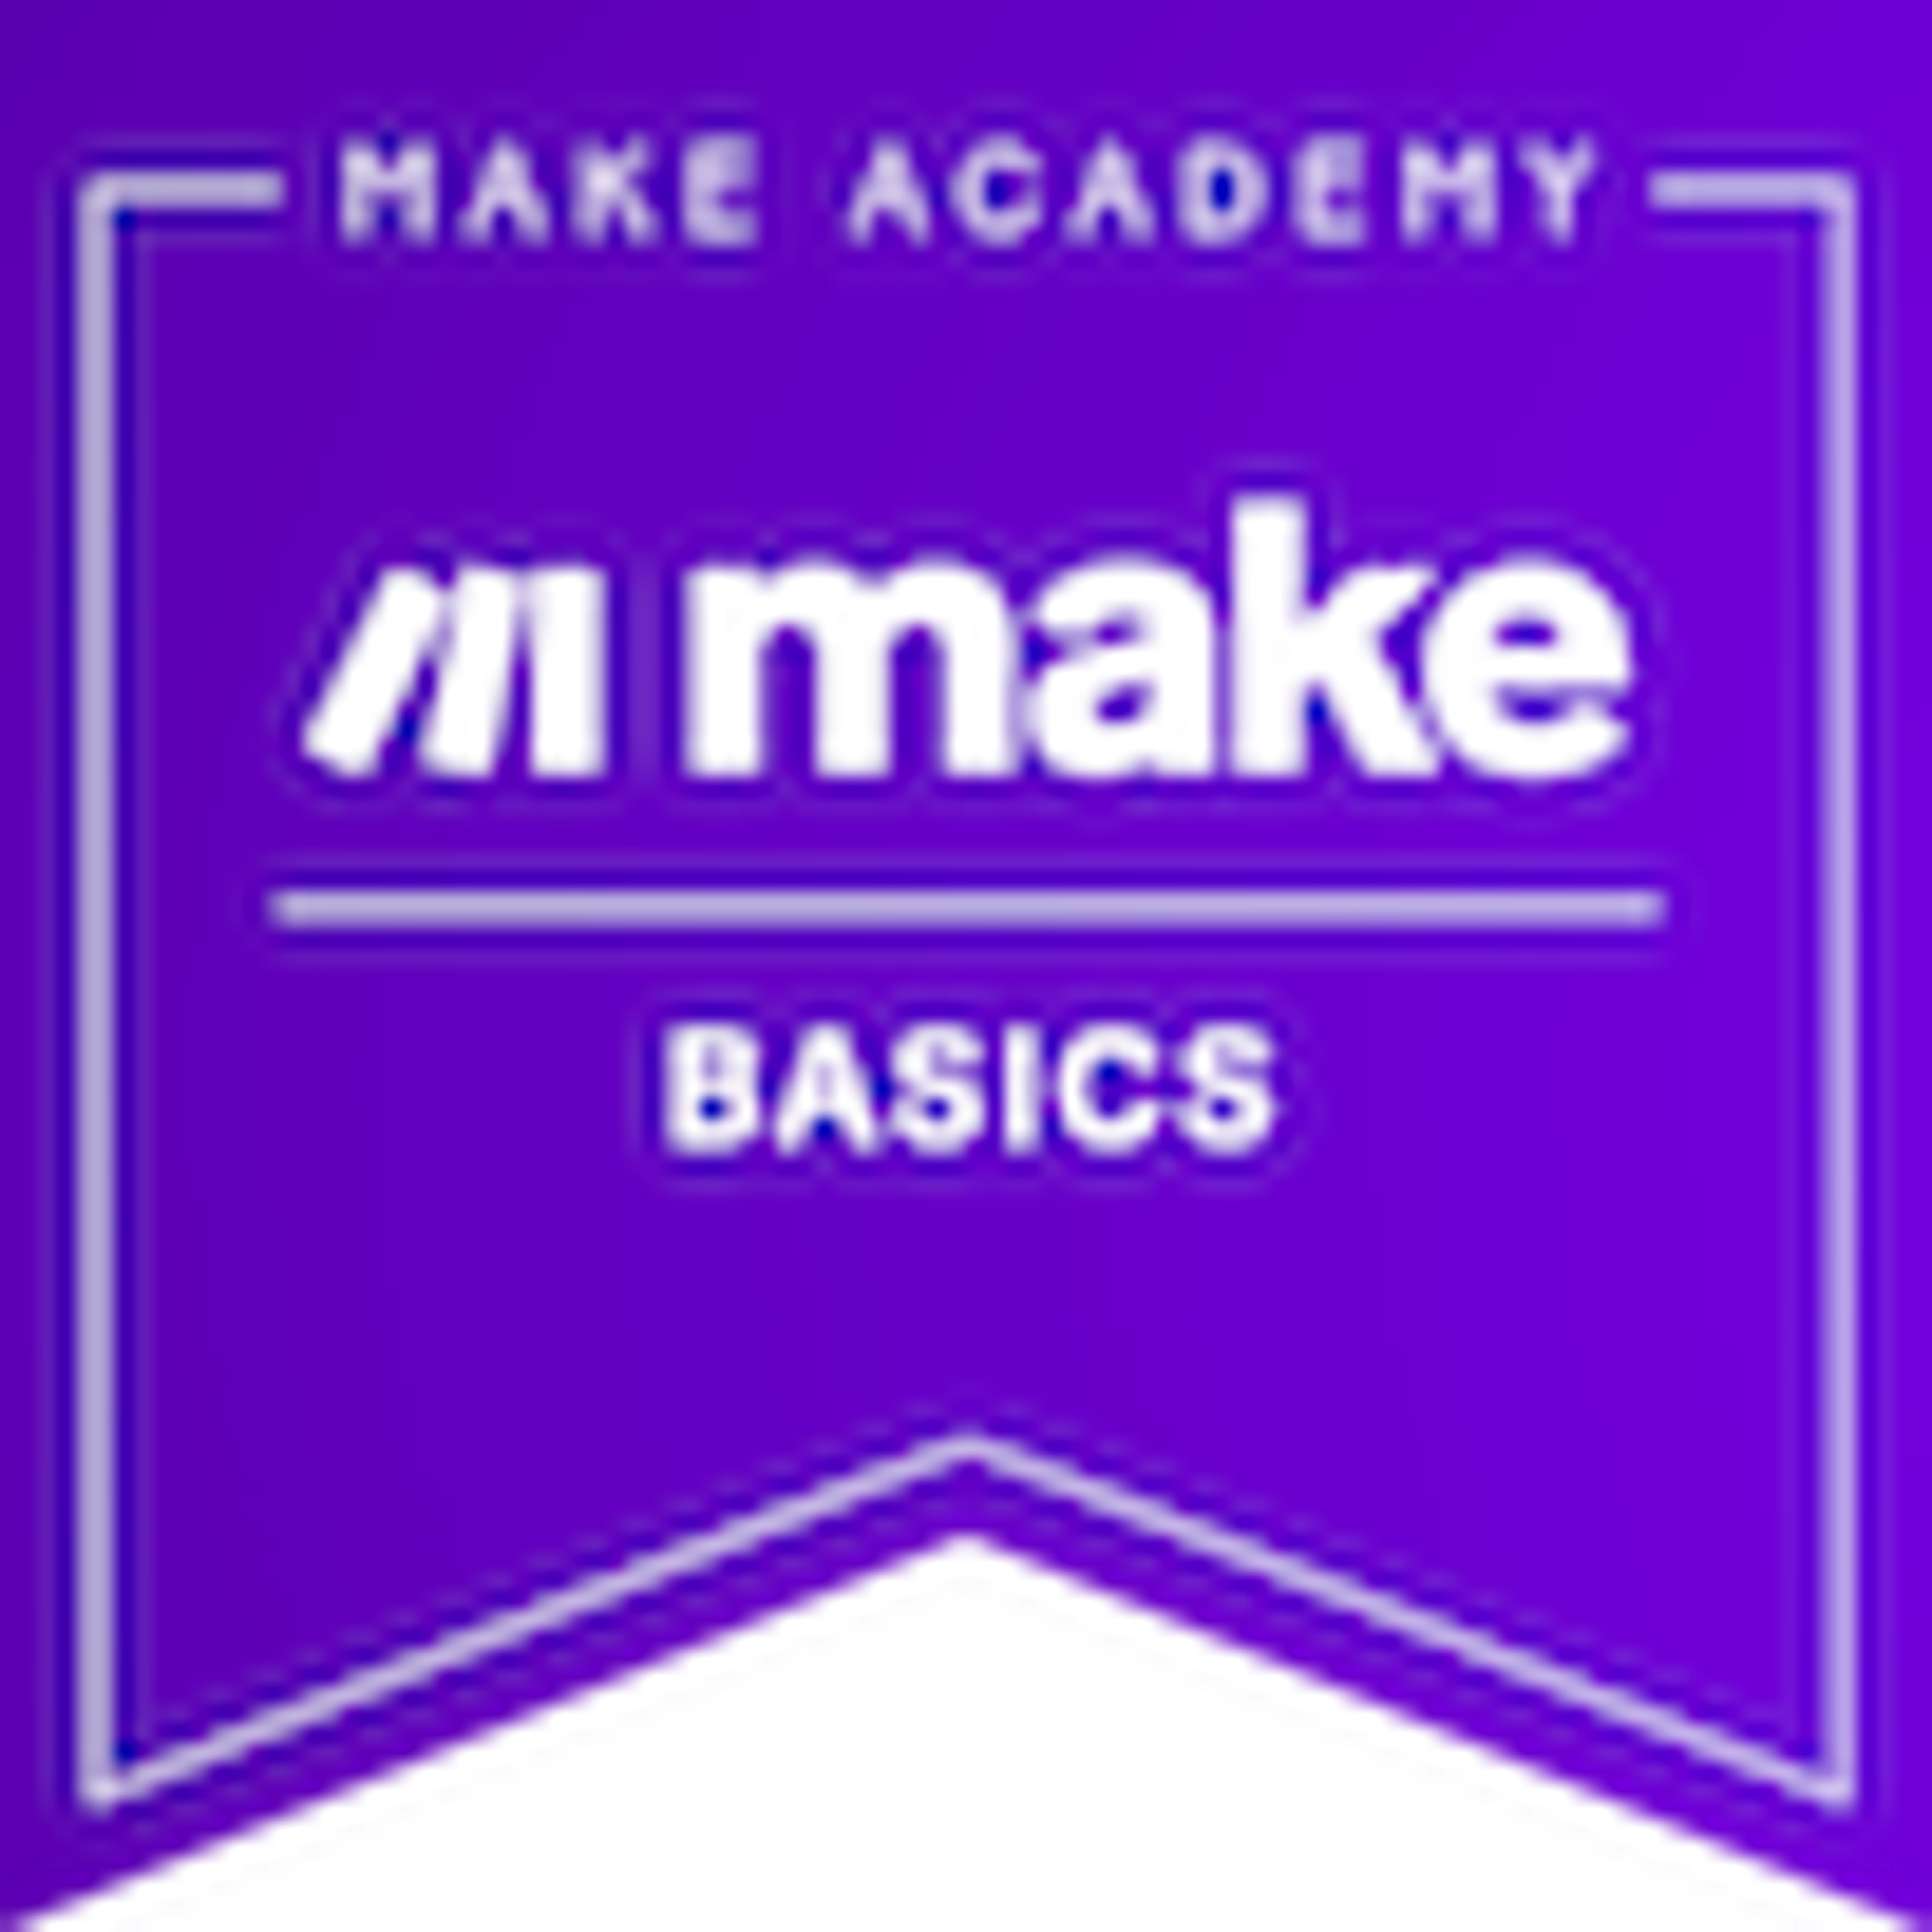 Make Basics Certificate